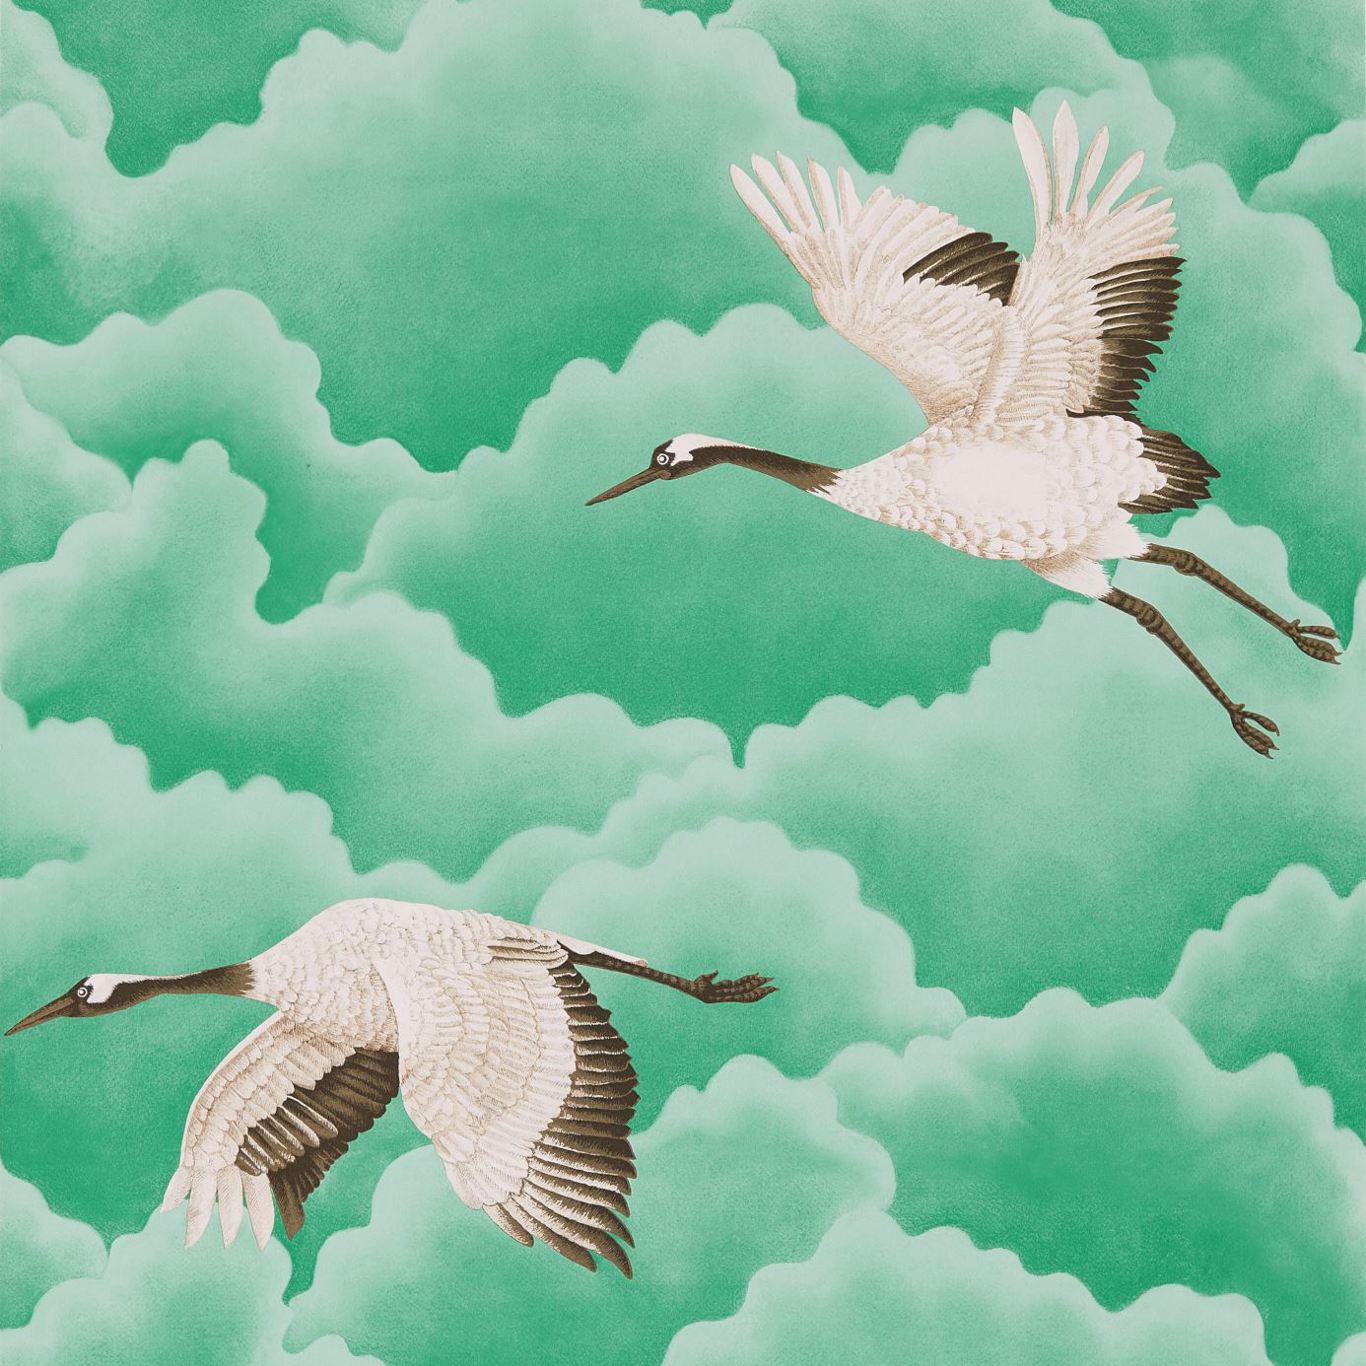 Harlequin Cranes In Flight